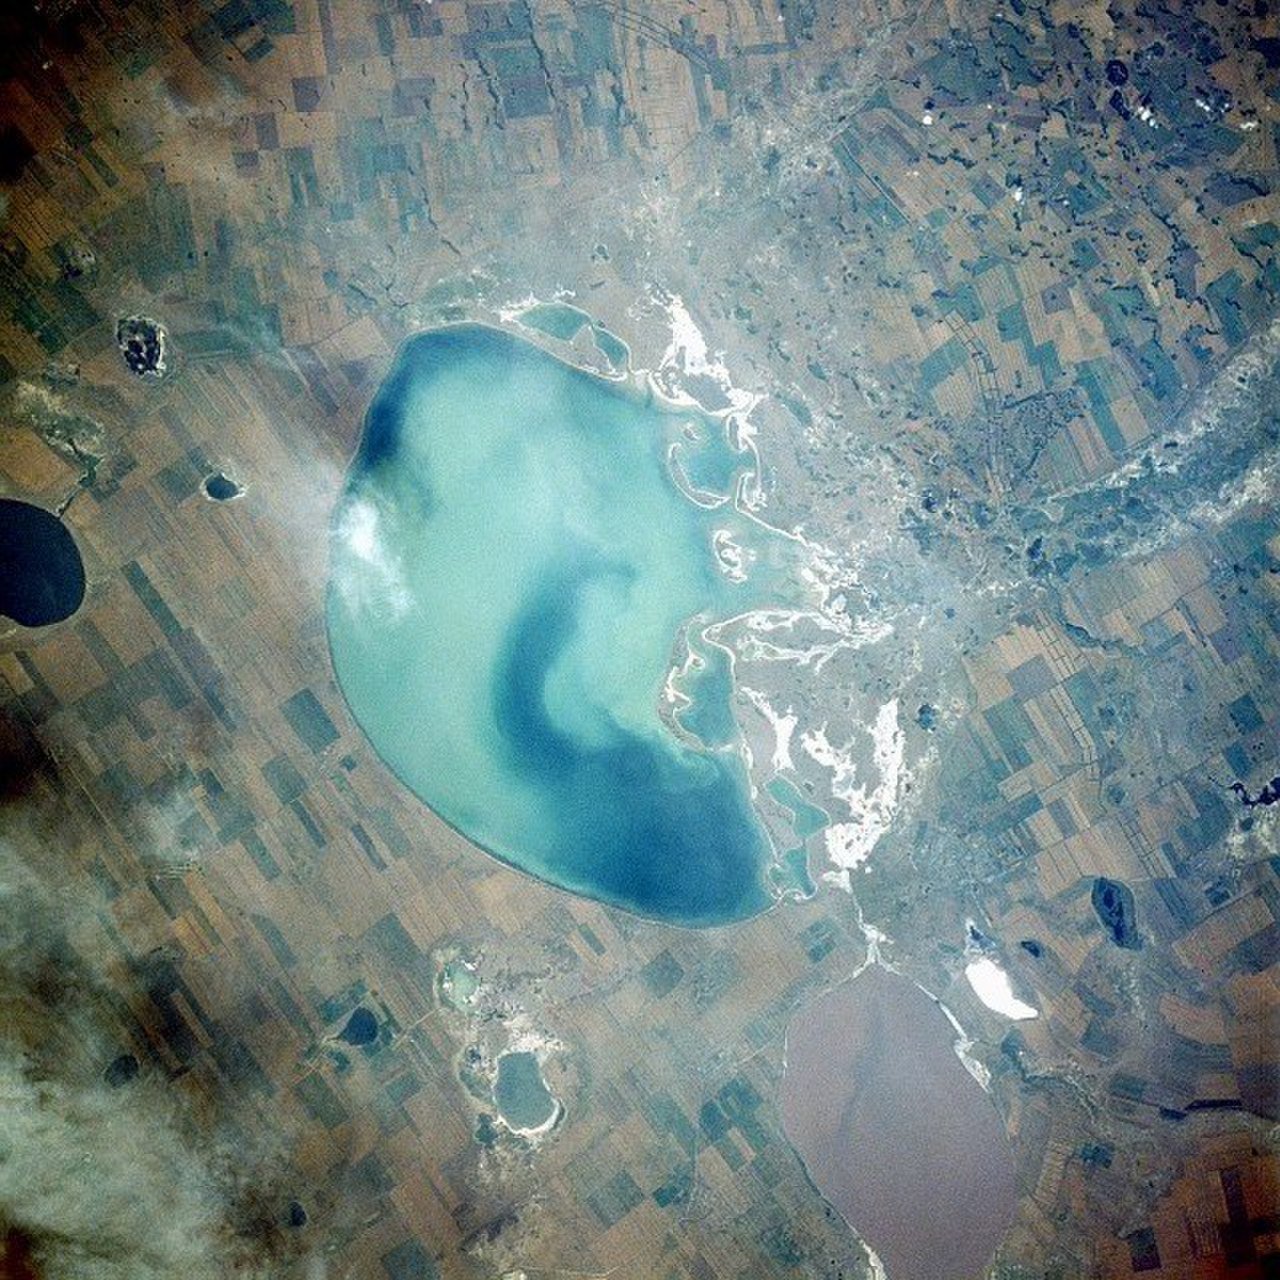 Кулундинское озеро алтайский. Кулундинское озеро. Озеро Кулундинское Алтайский. Кулундинское озеро на Алтае. Озеро большое Кулундинское Алтайский край.